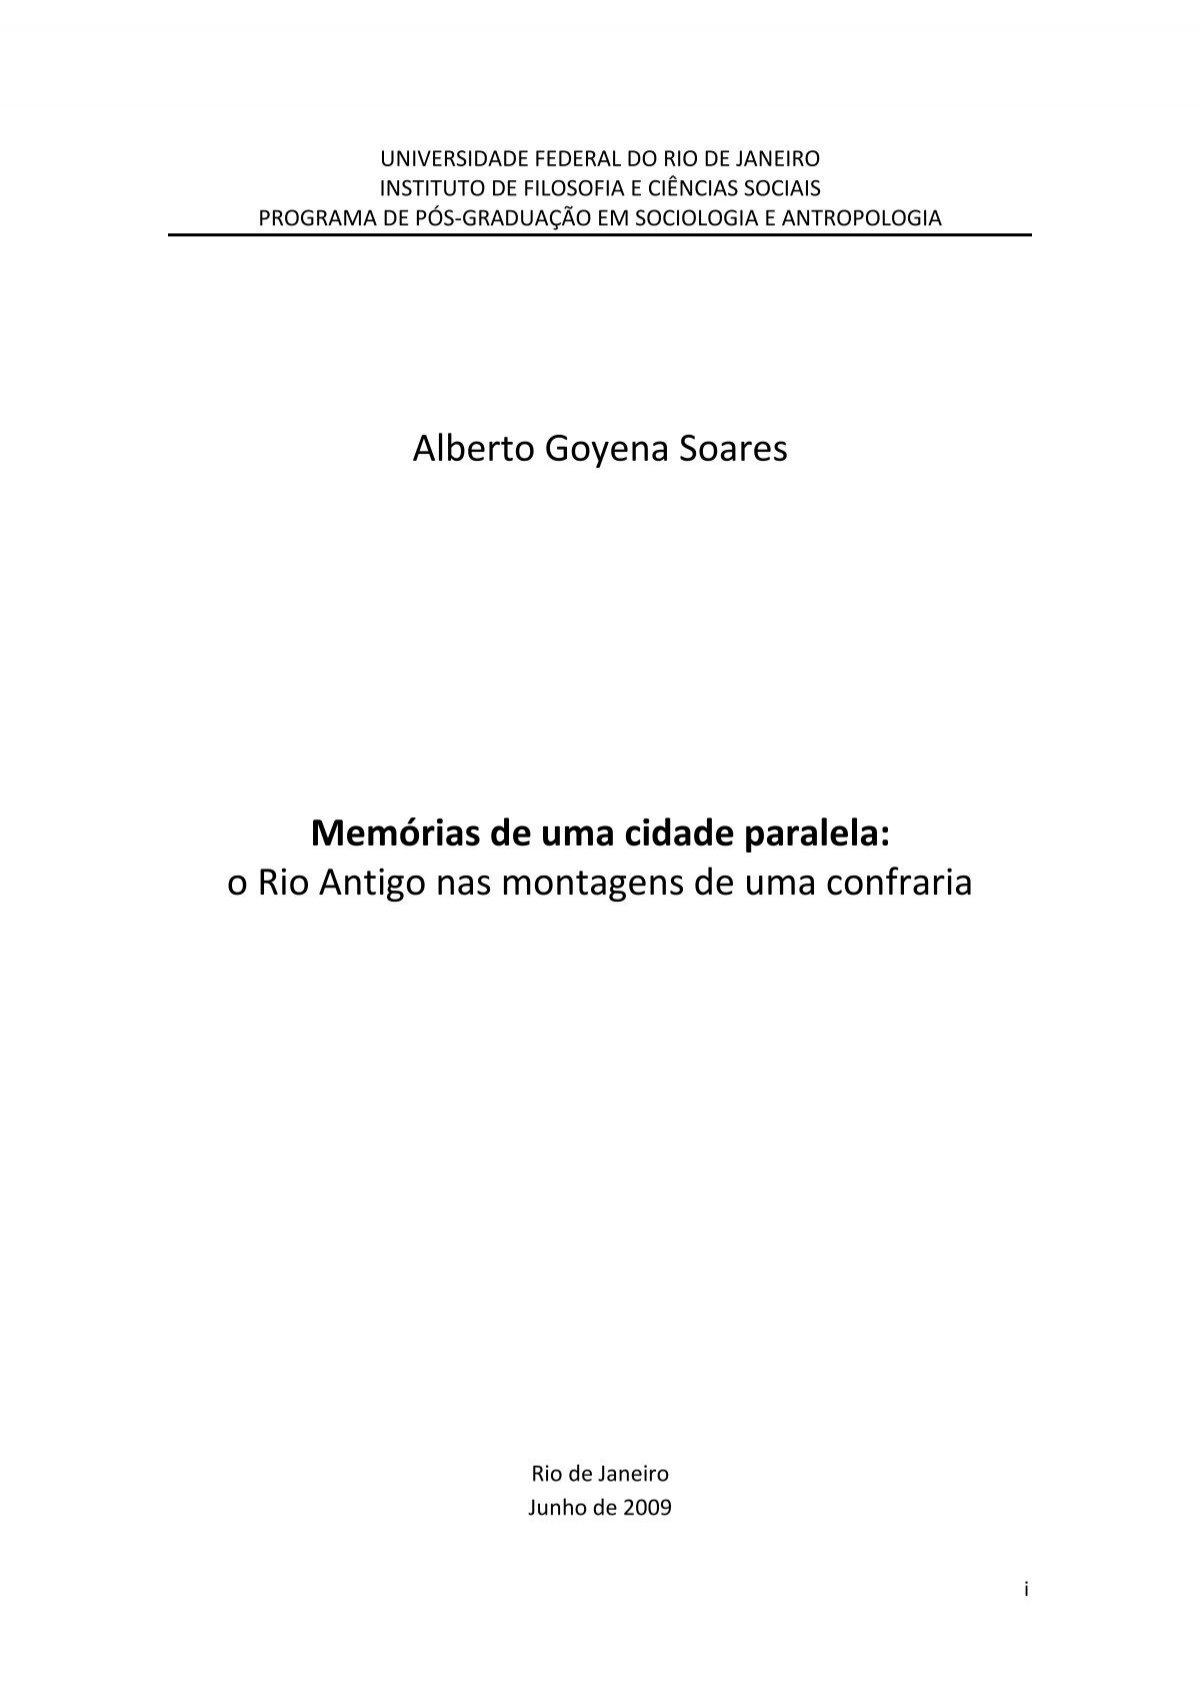 Service Learning, Orlando Petiz Pereira - Livro - Bertrand